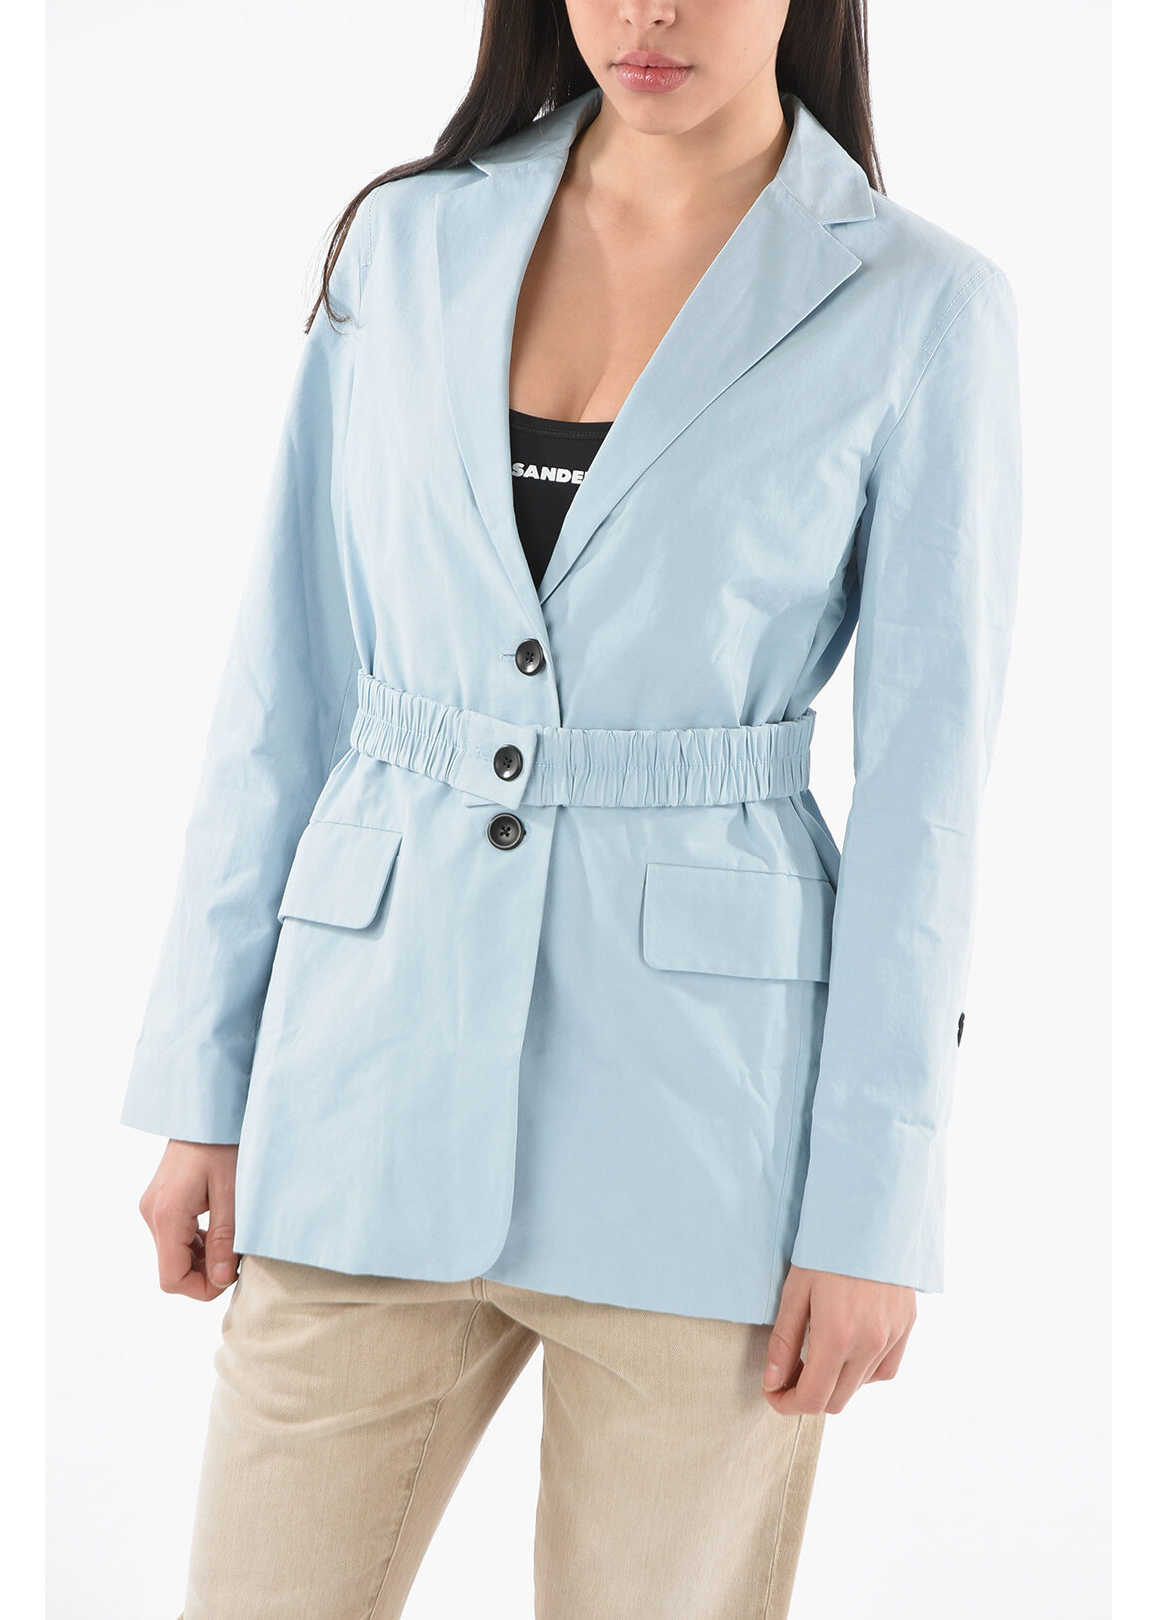 Proenza Schouler White Label Elastic Belted Blazer With Flap Pocket Light Blue